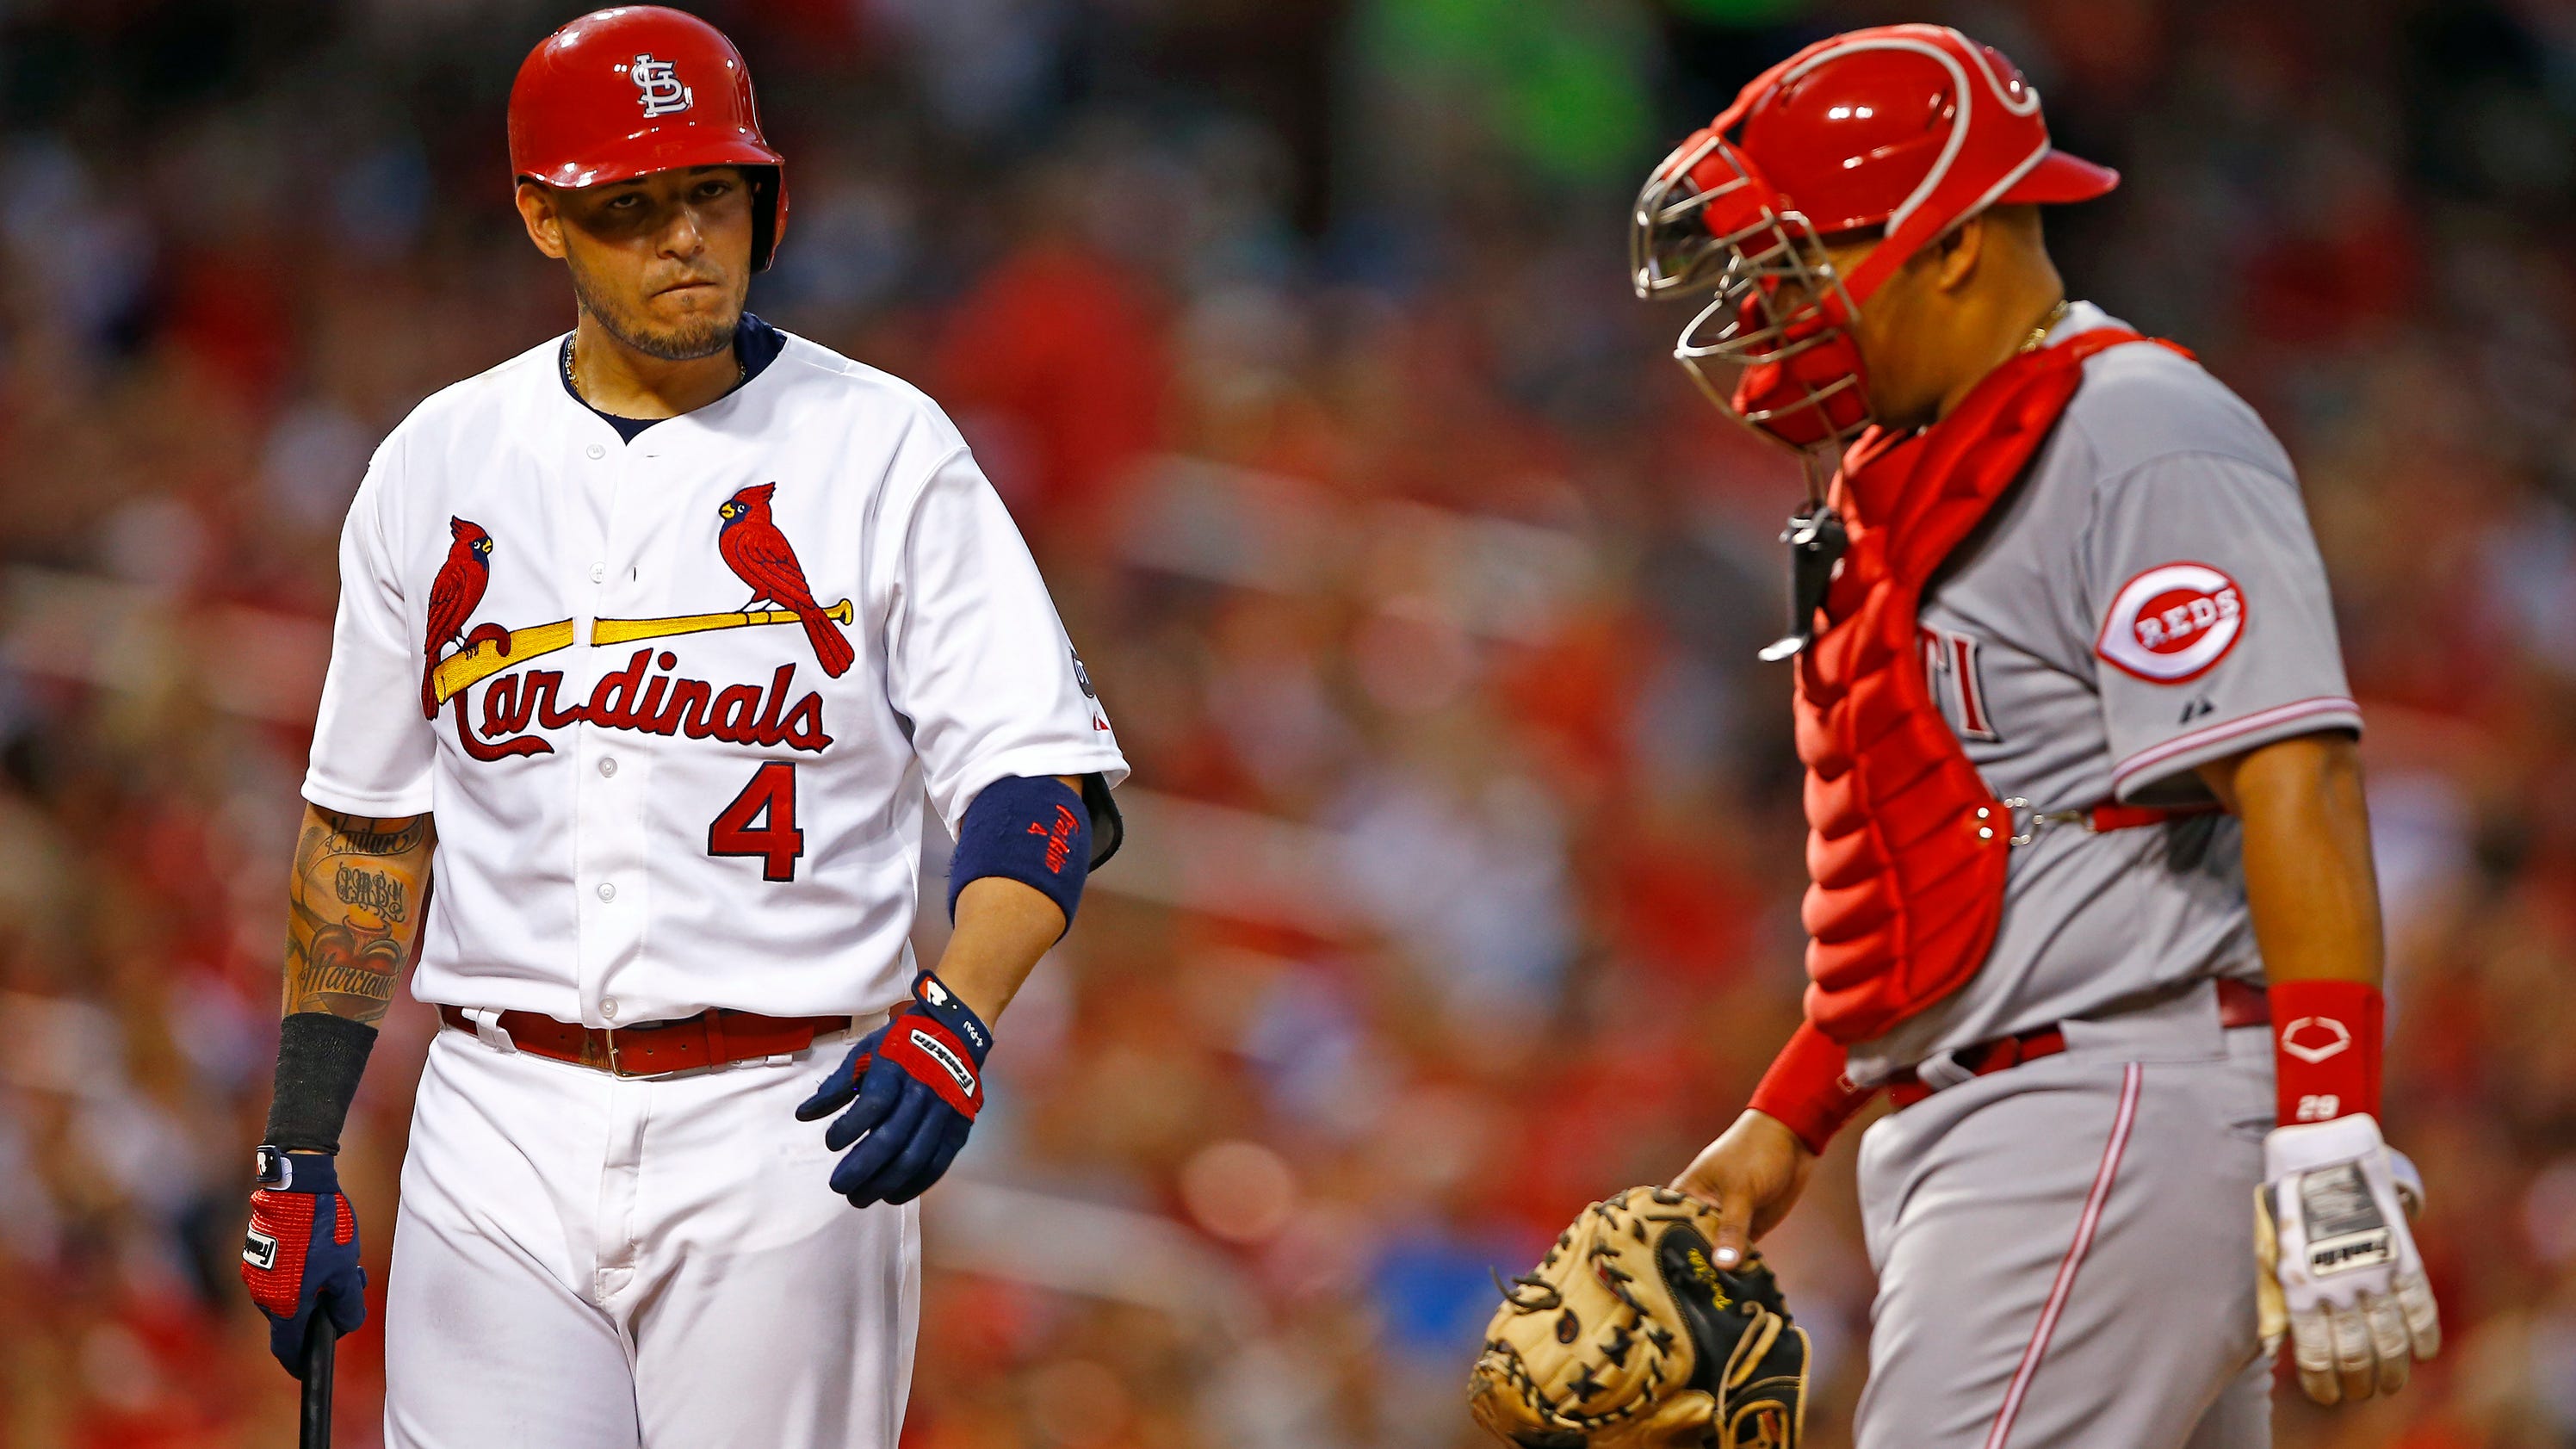 Cardinals, Fox Sports Midwest announce new long-term deal